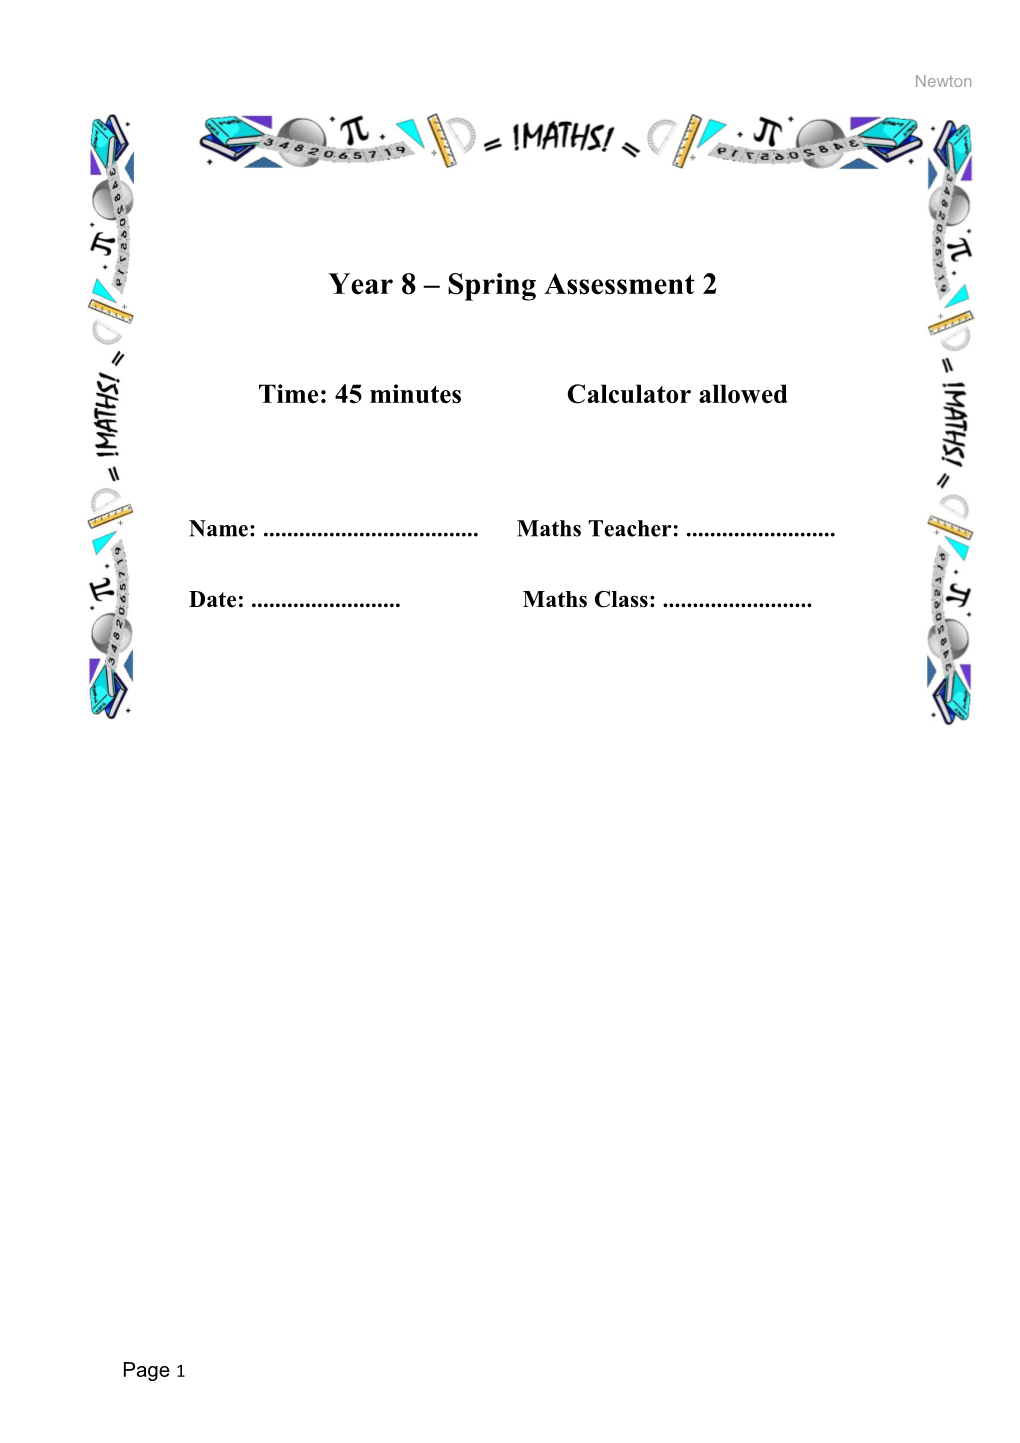 Year 8 Spring Assessment 2